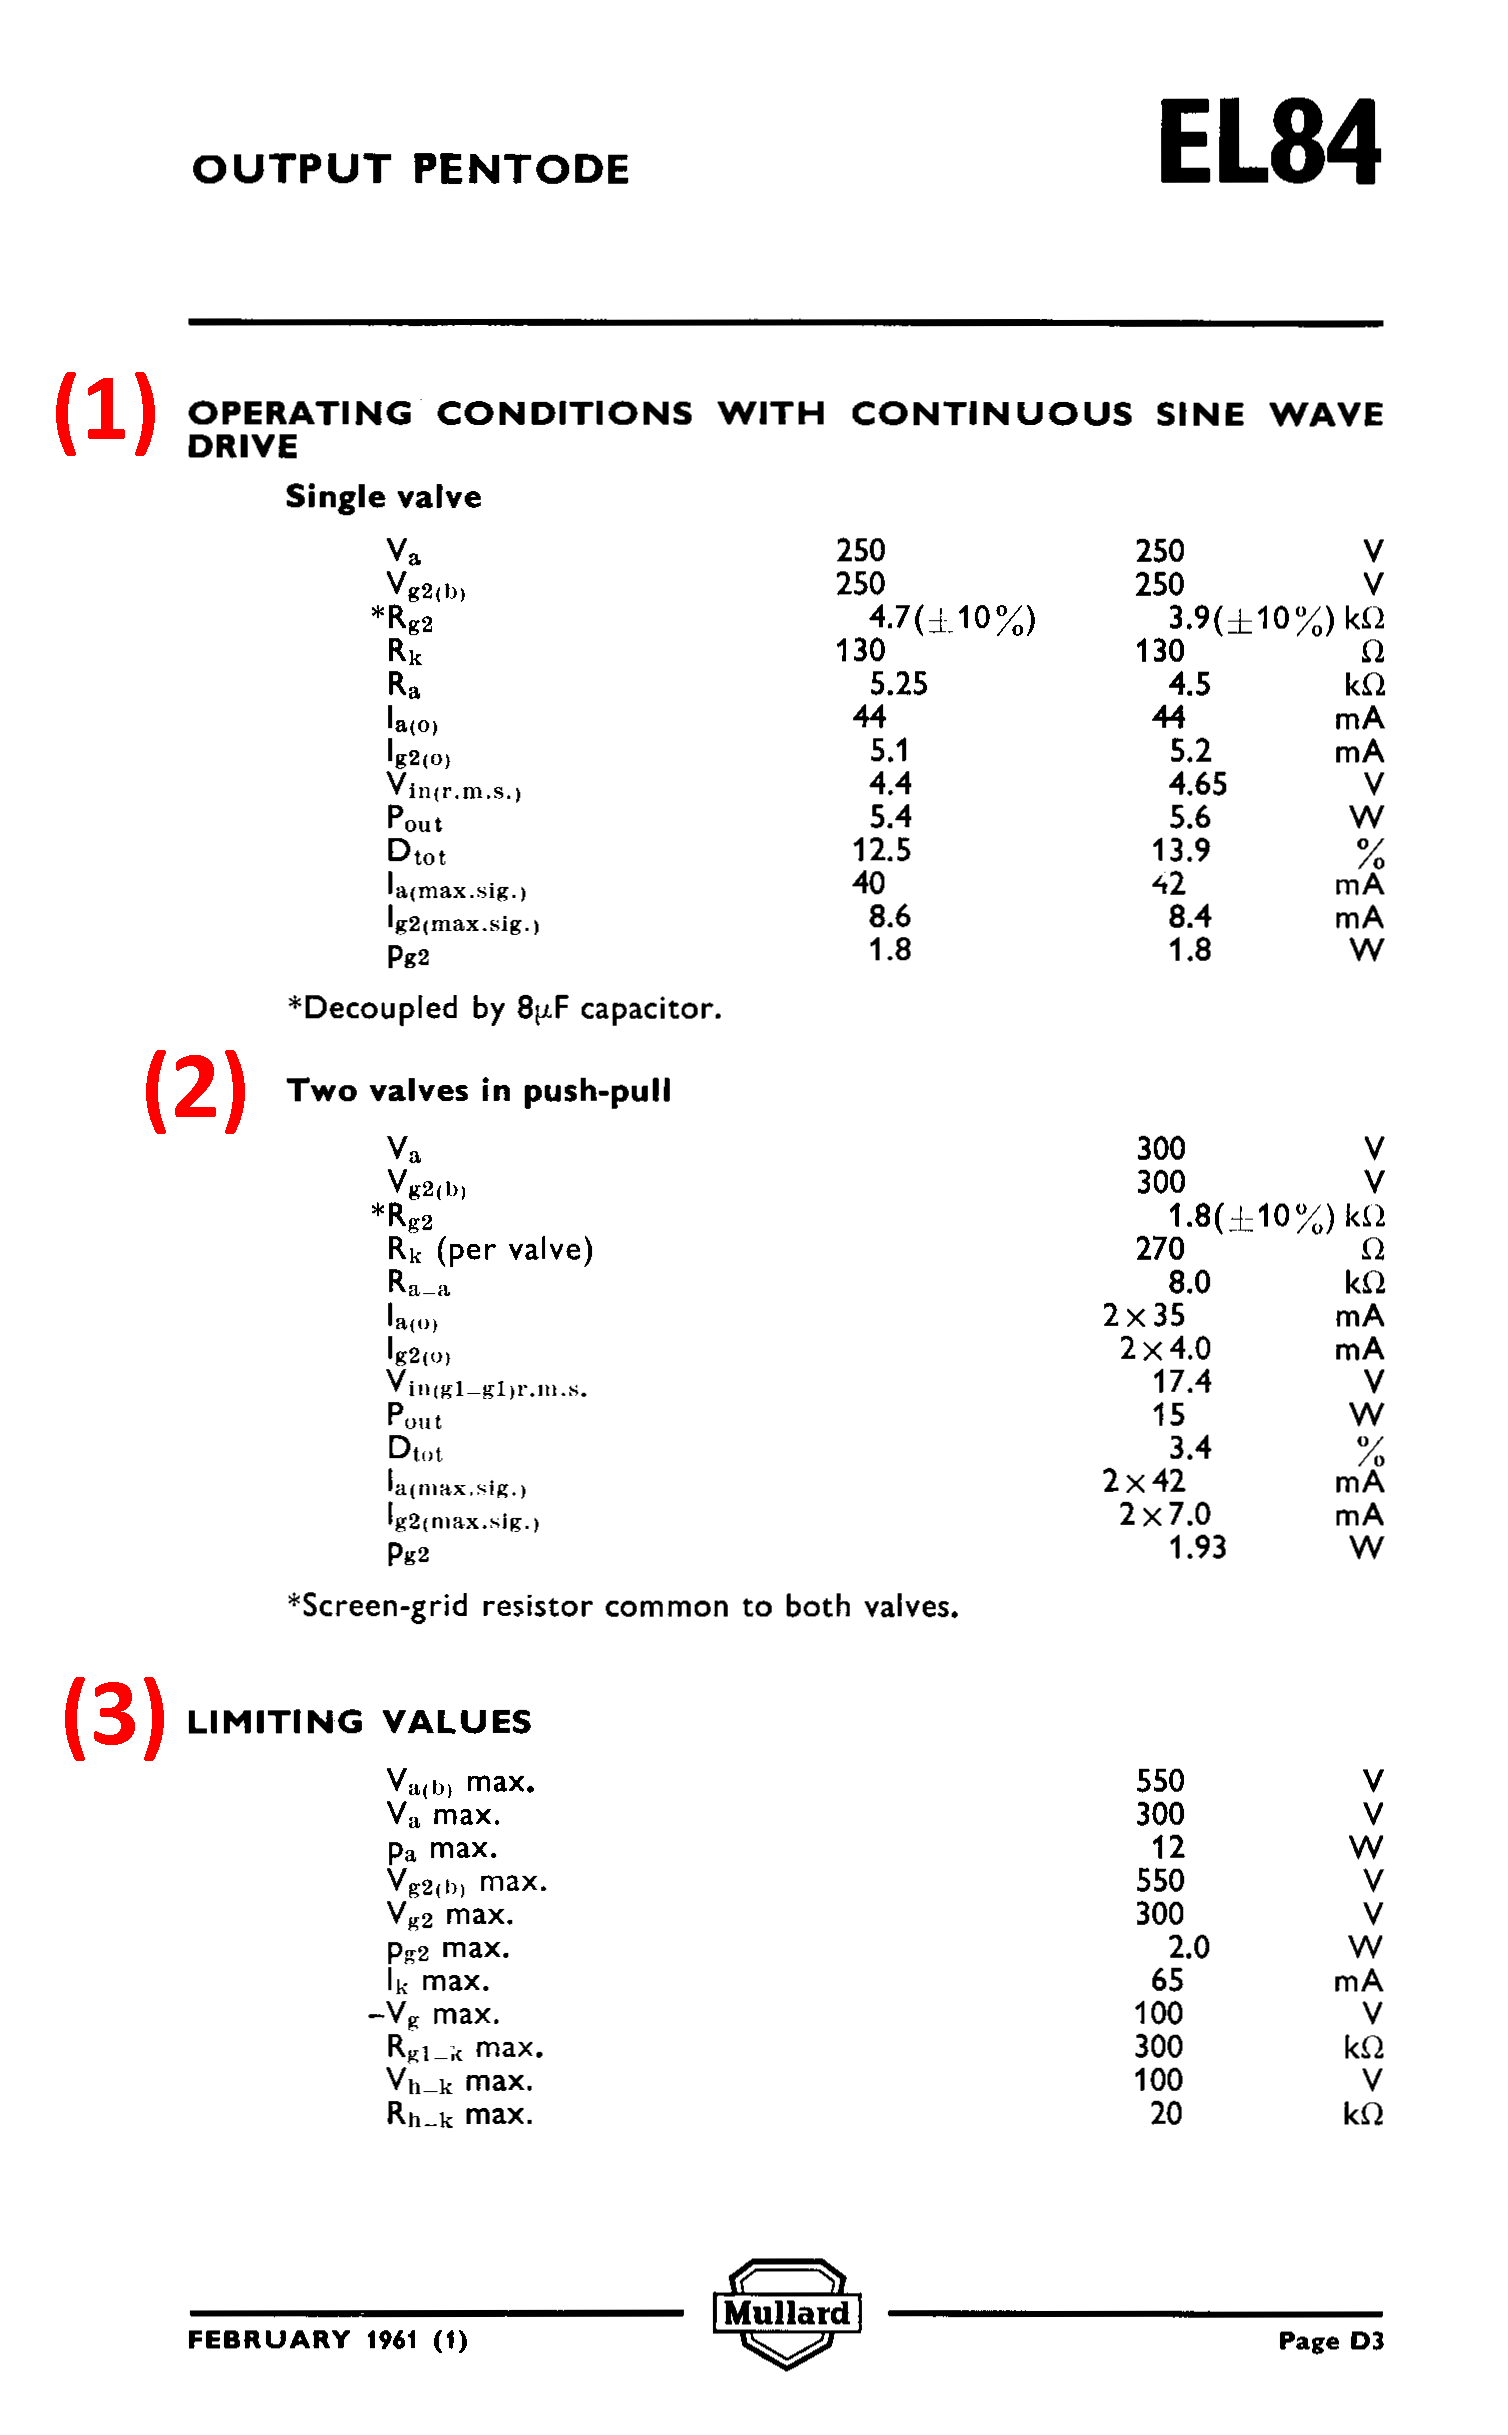 esempio di lettura di un datasheet: MULLARD del 1964, pagina n.3